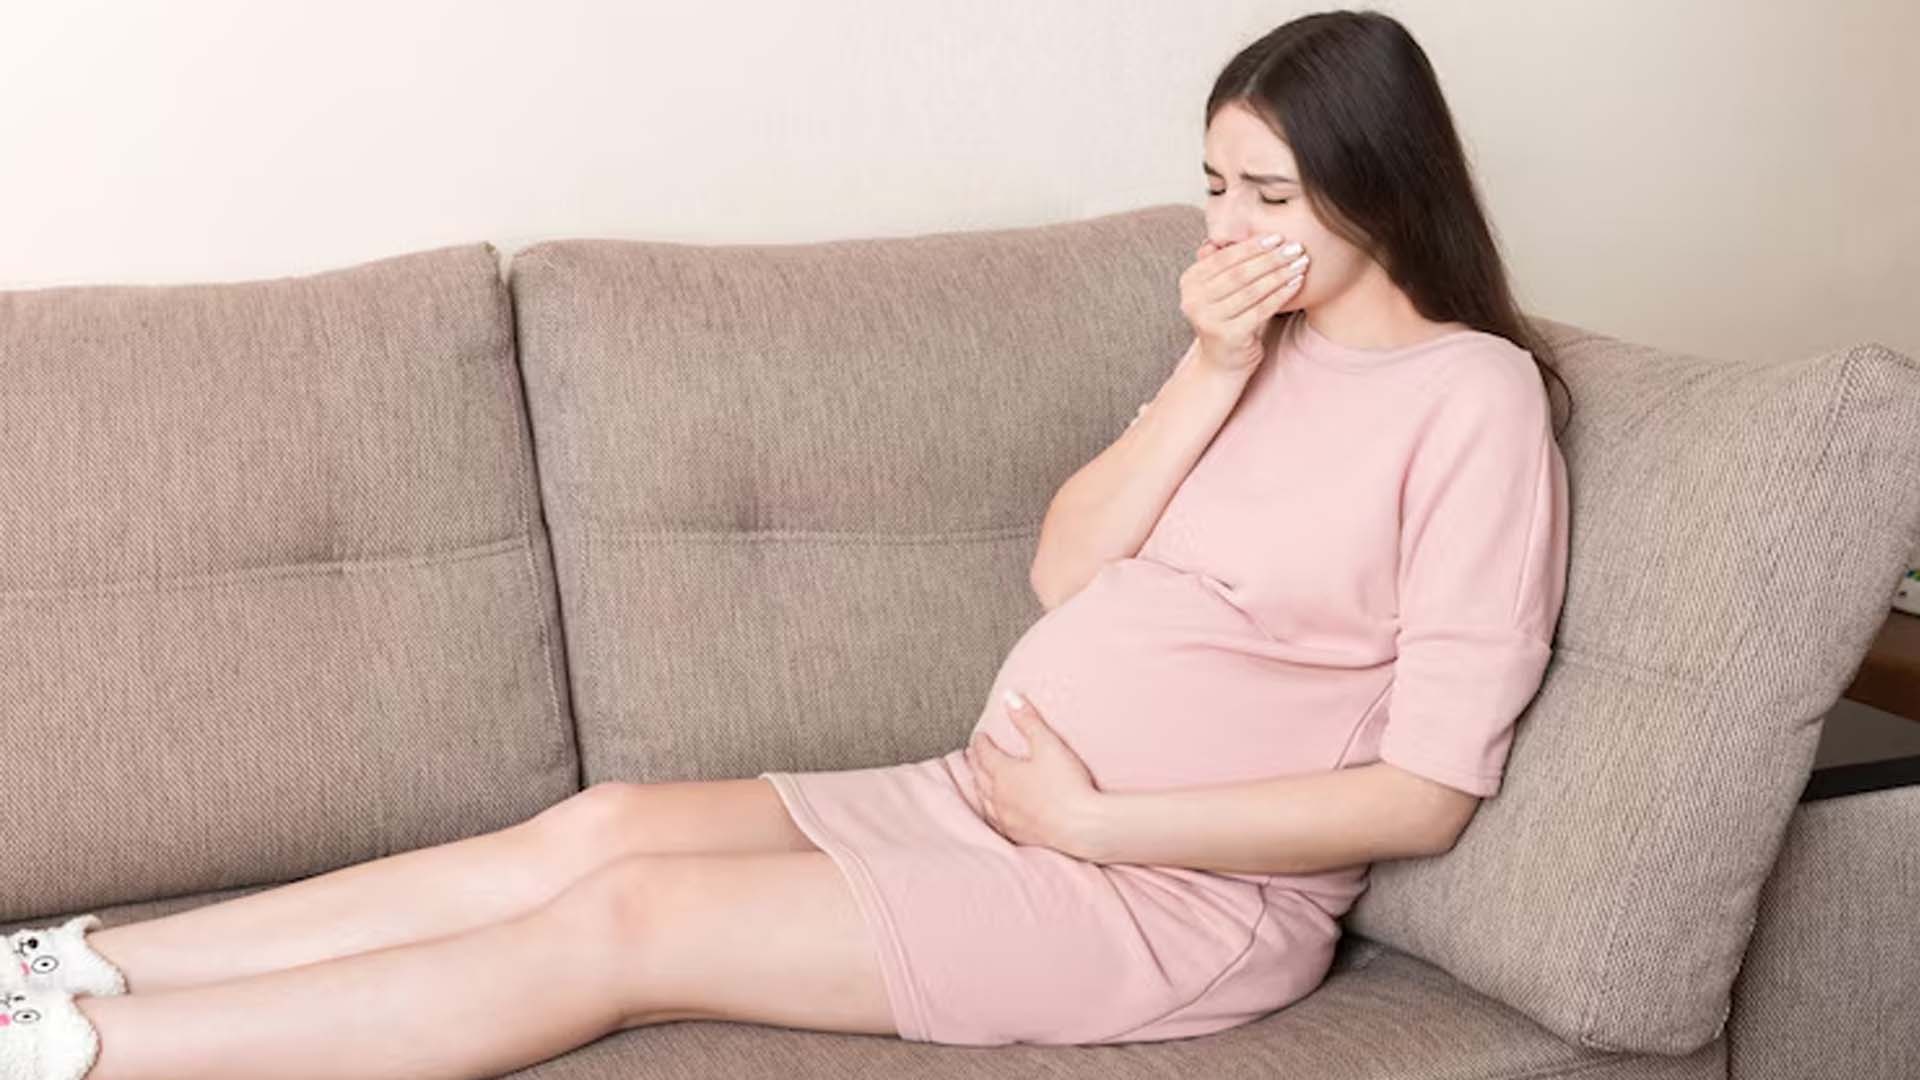 Pregnant Women with Nausea